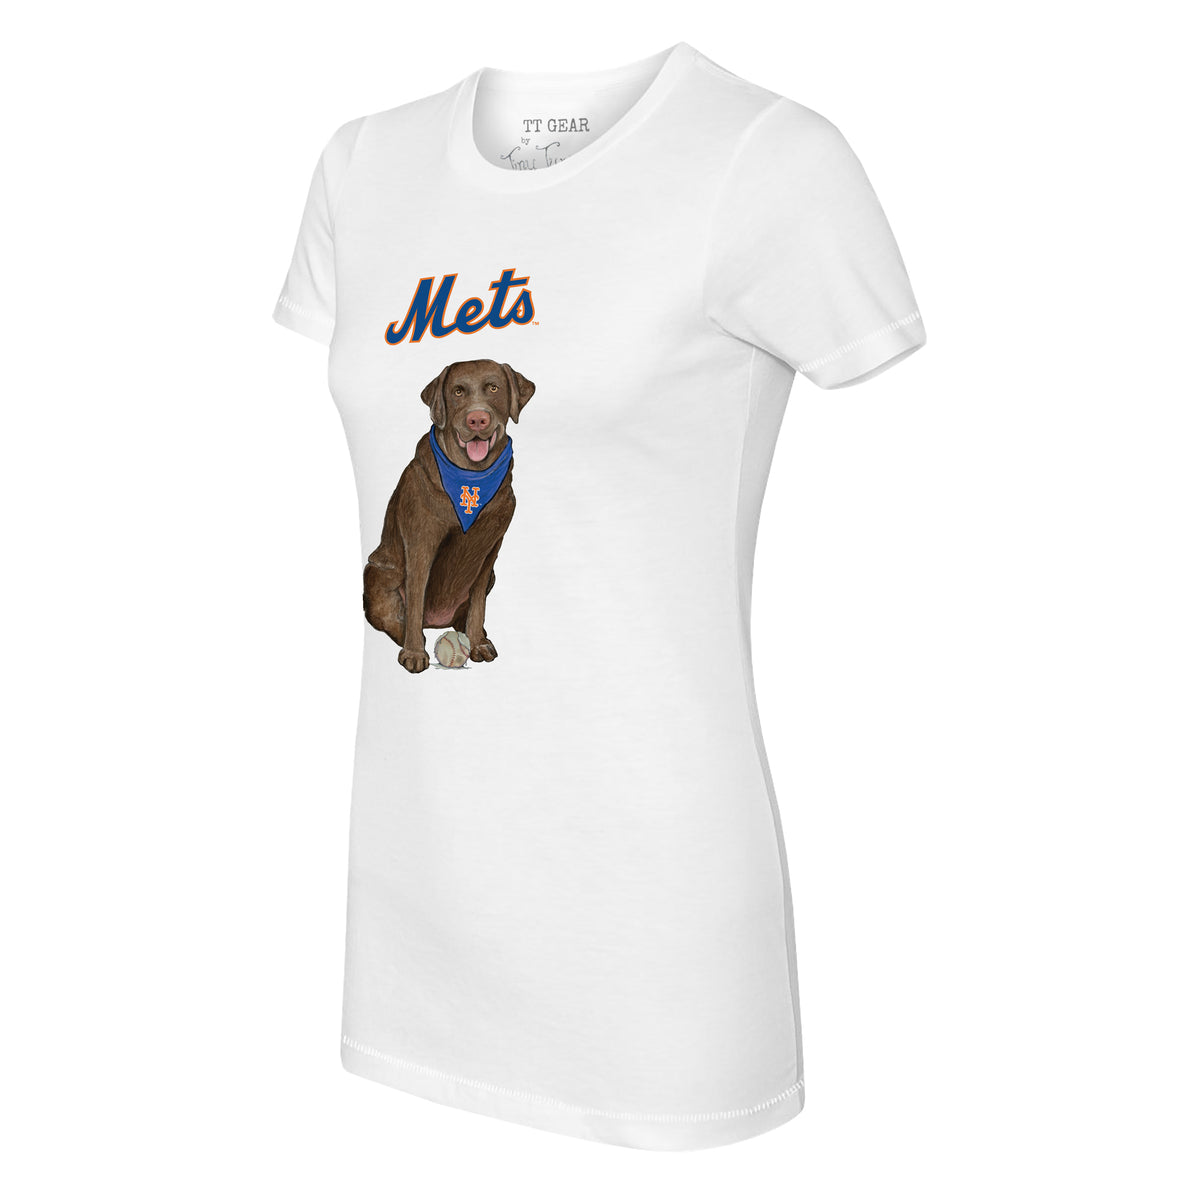 New York Mets Chocolate Labrador Retriever Tee Shirt